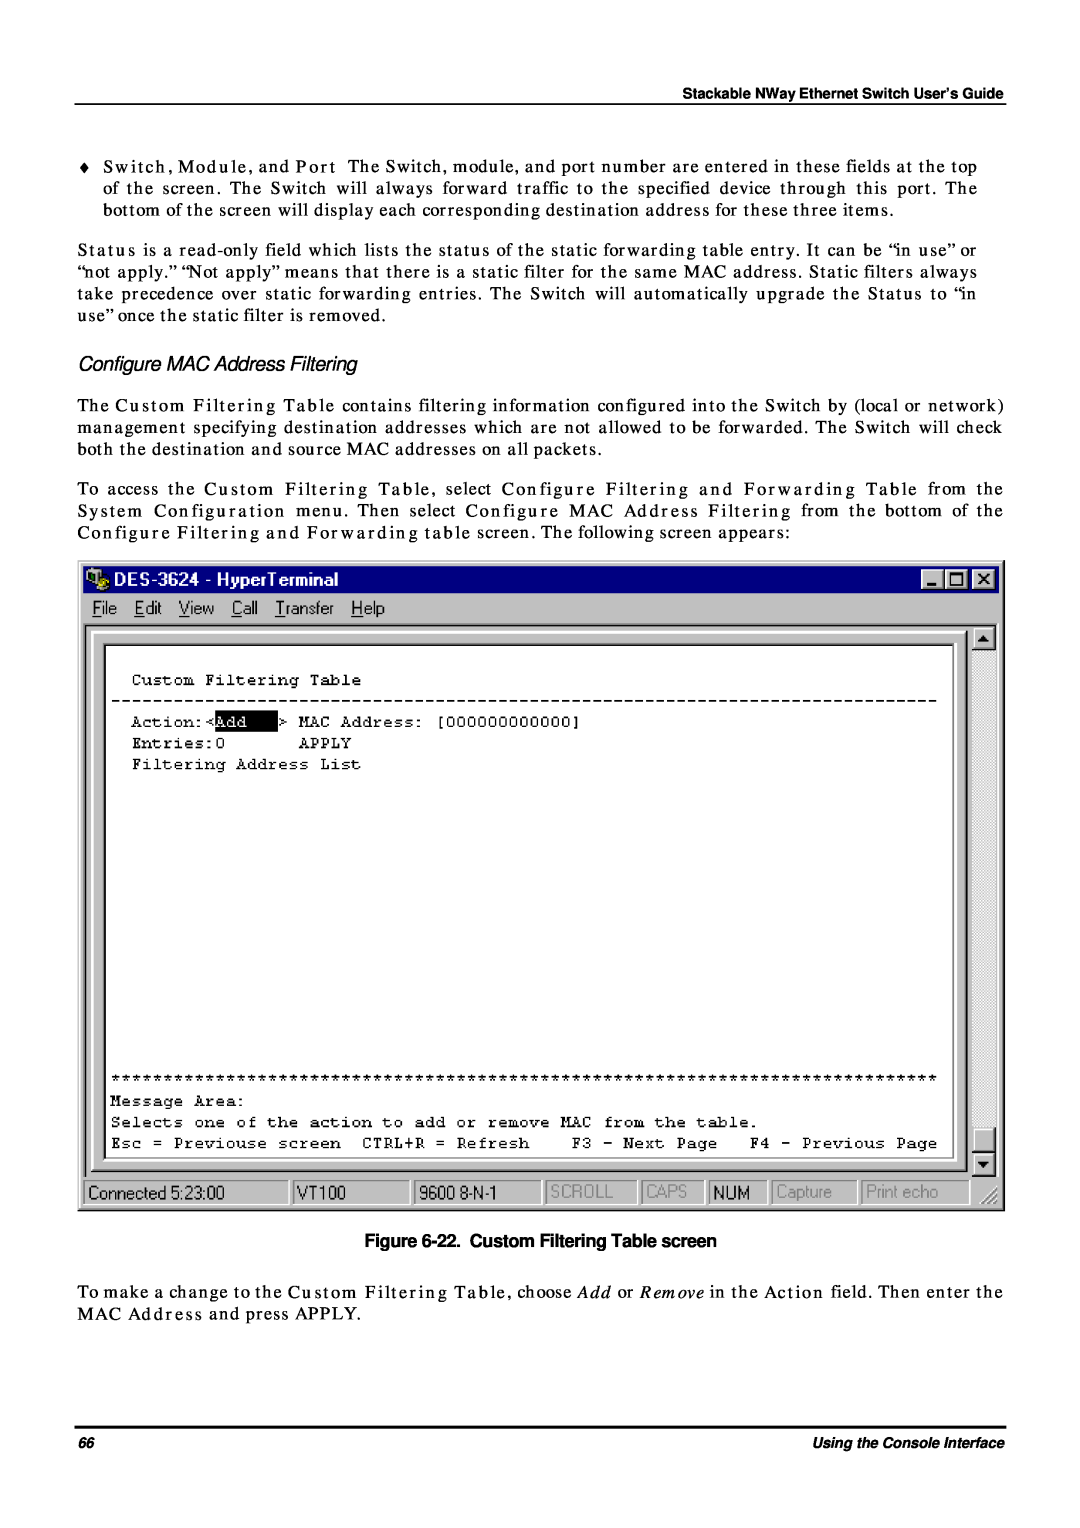 D-Link DES-3624 manual Configure MAC Address Filtering, 22. Custom Filtering Table screen 